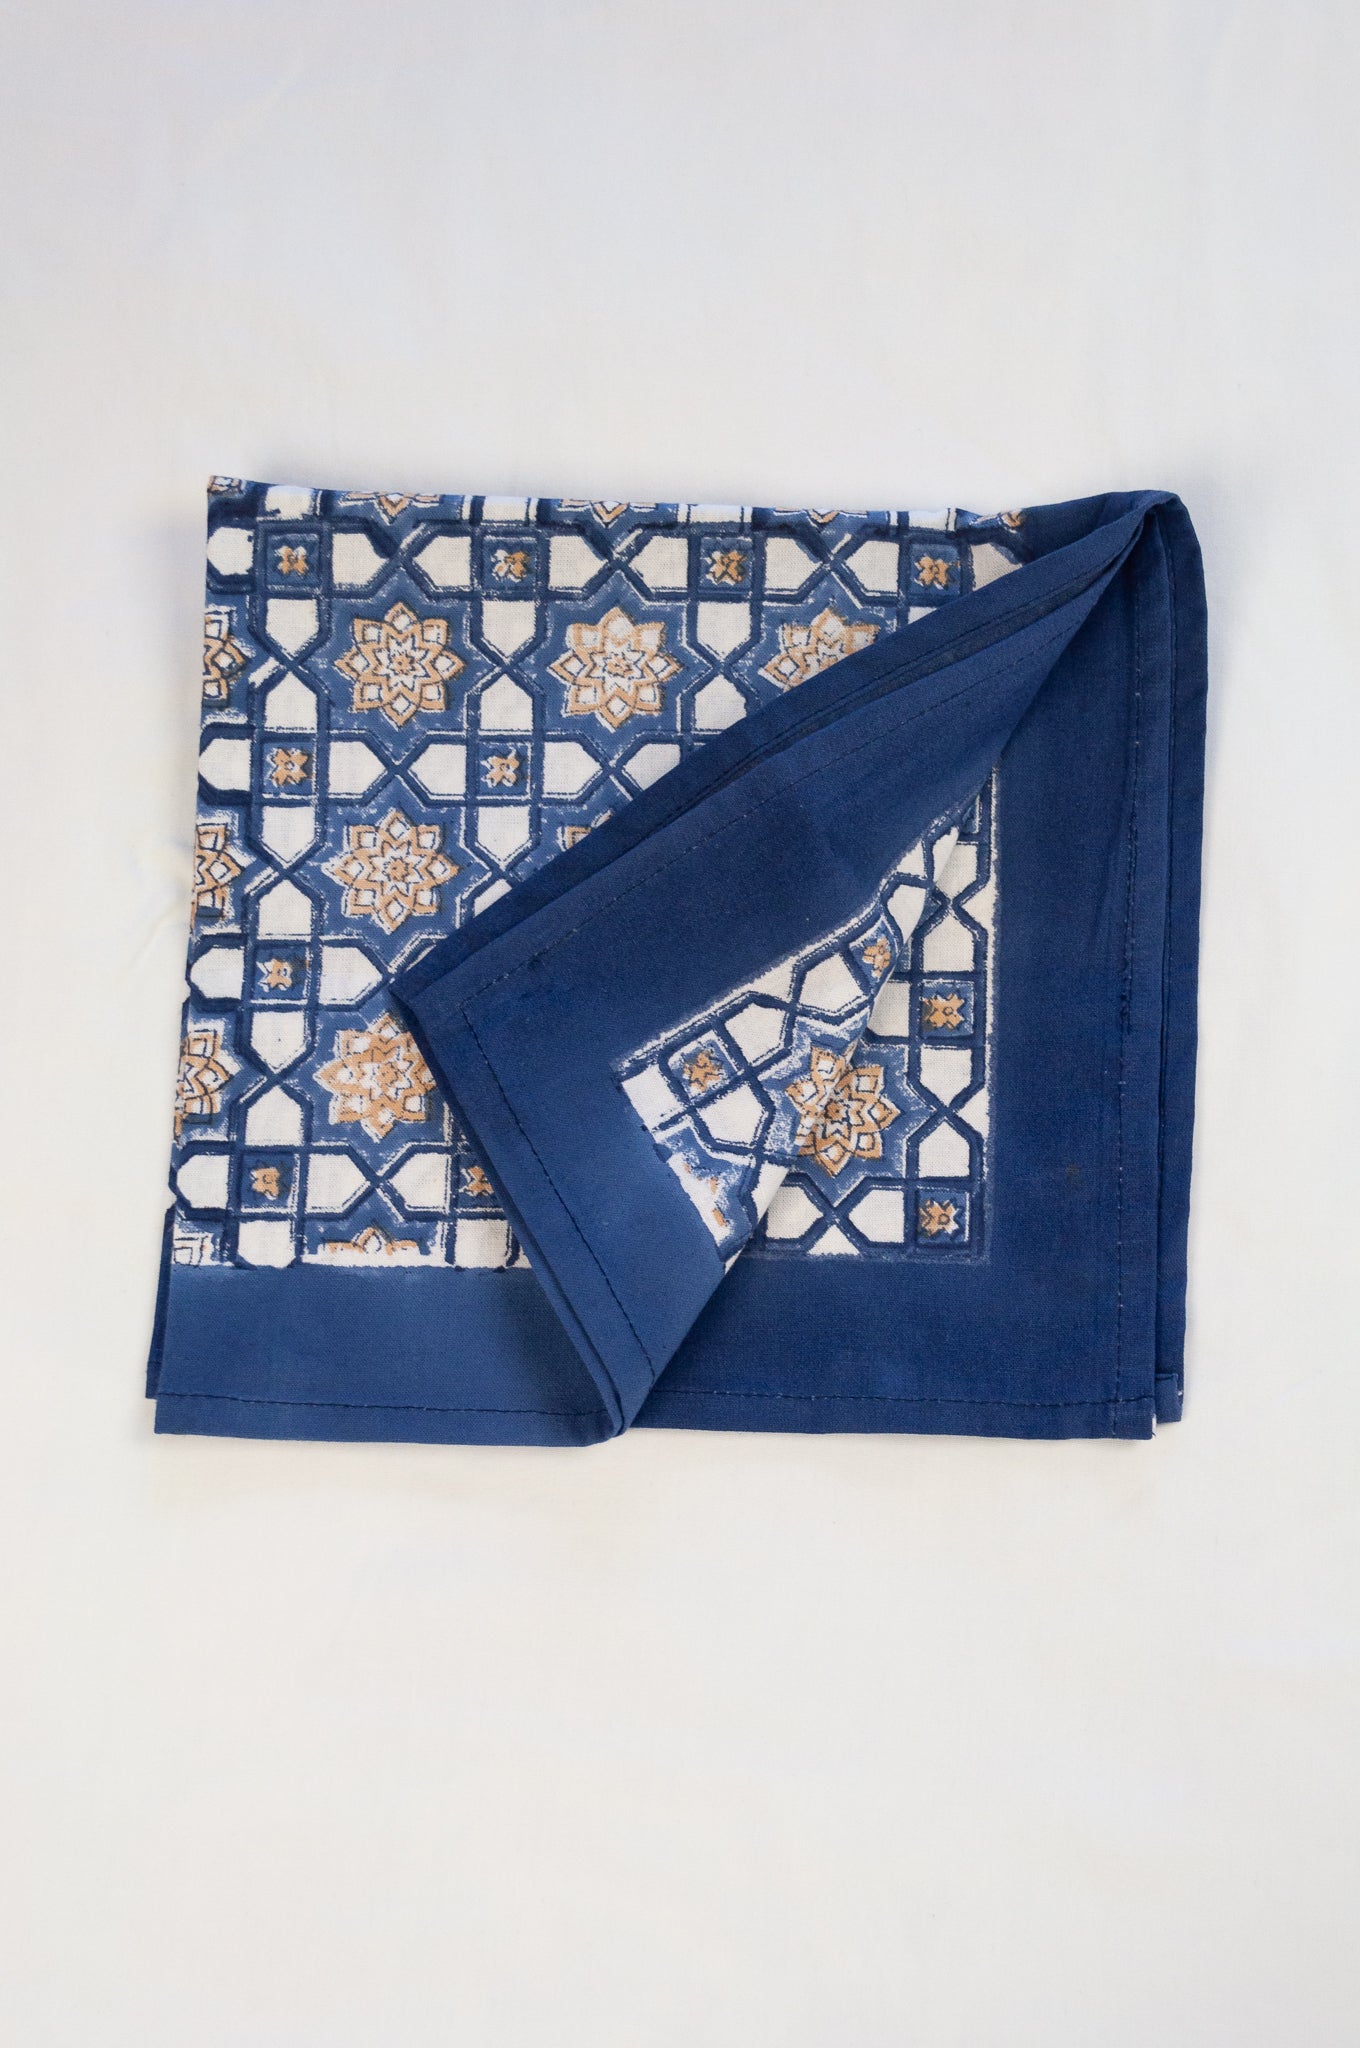 Block print cotton table napkins, Almira Moroccan tile print indigo and denim blue with soft gold 